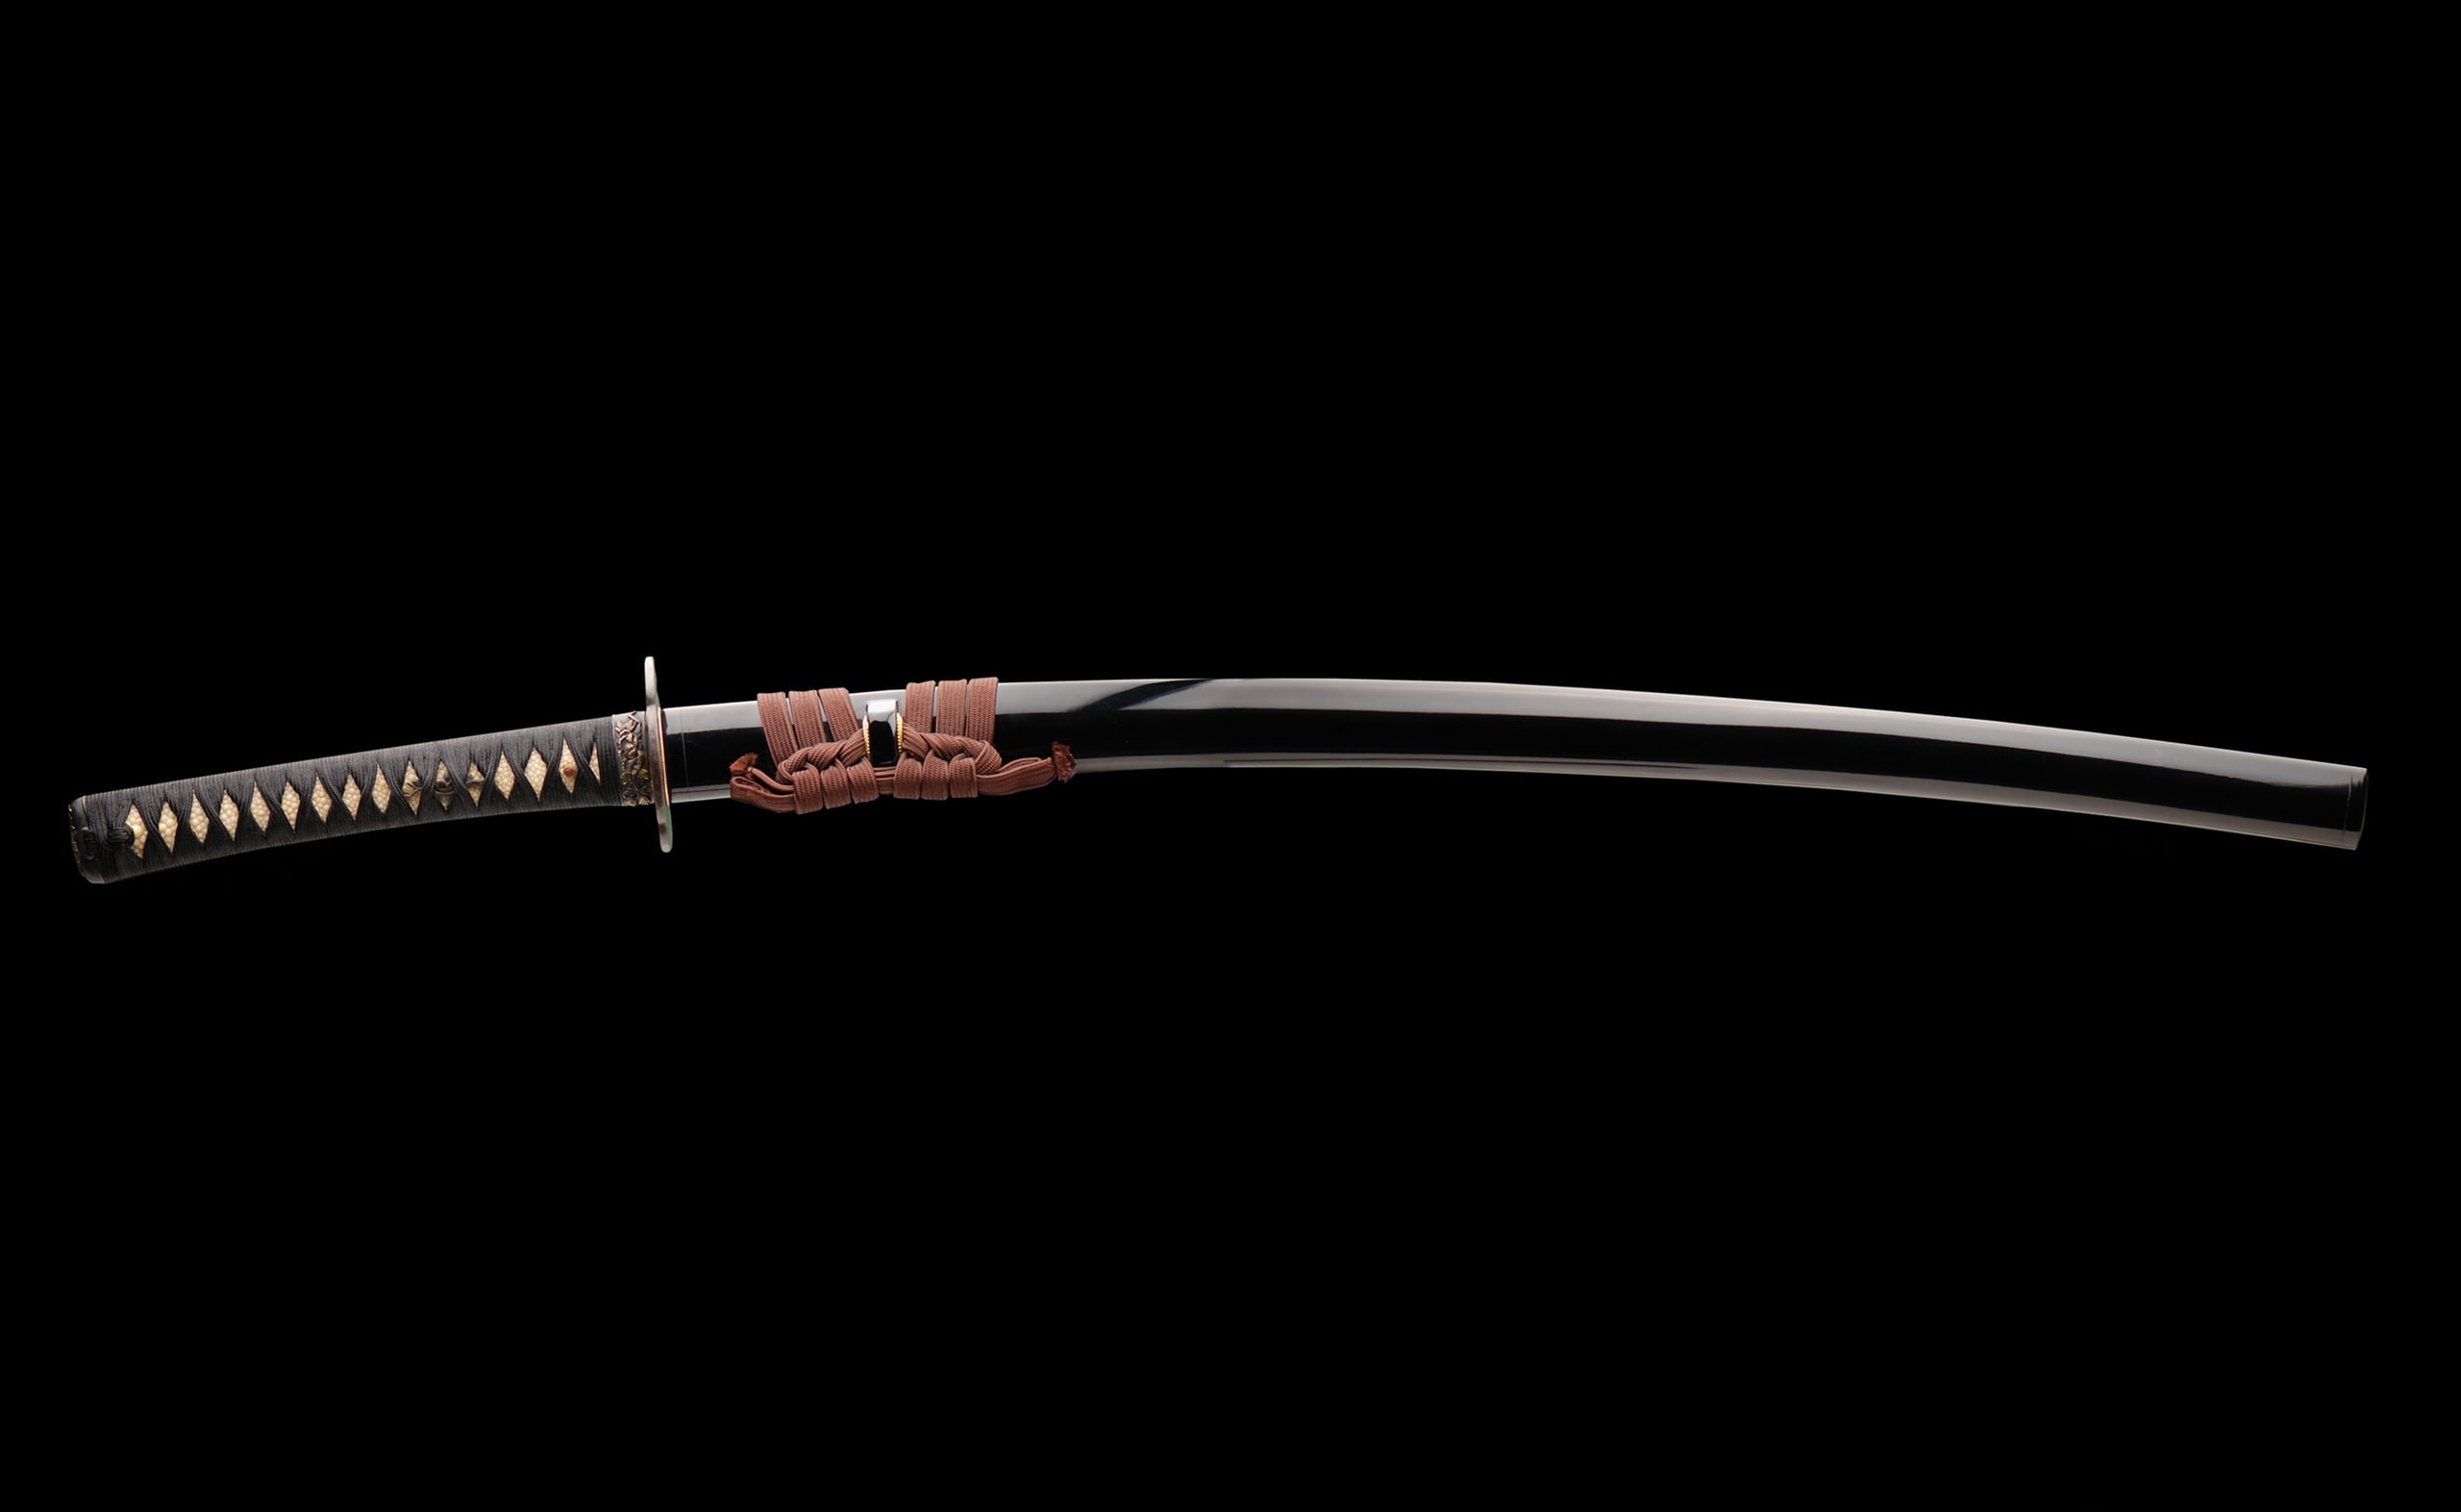 Japanese Samurai Swords, black katana, Army, studio shot, black background